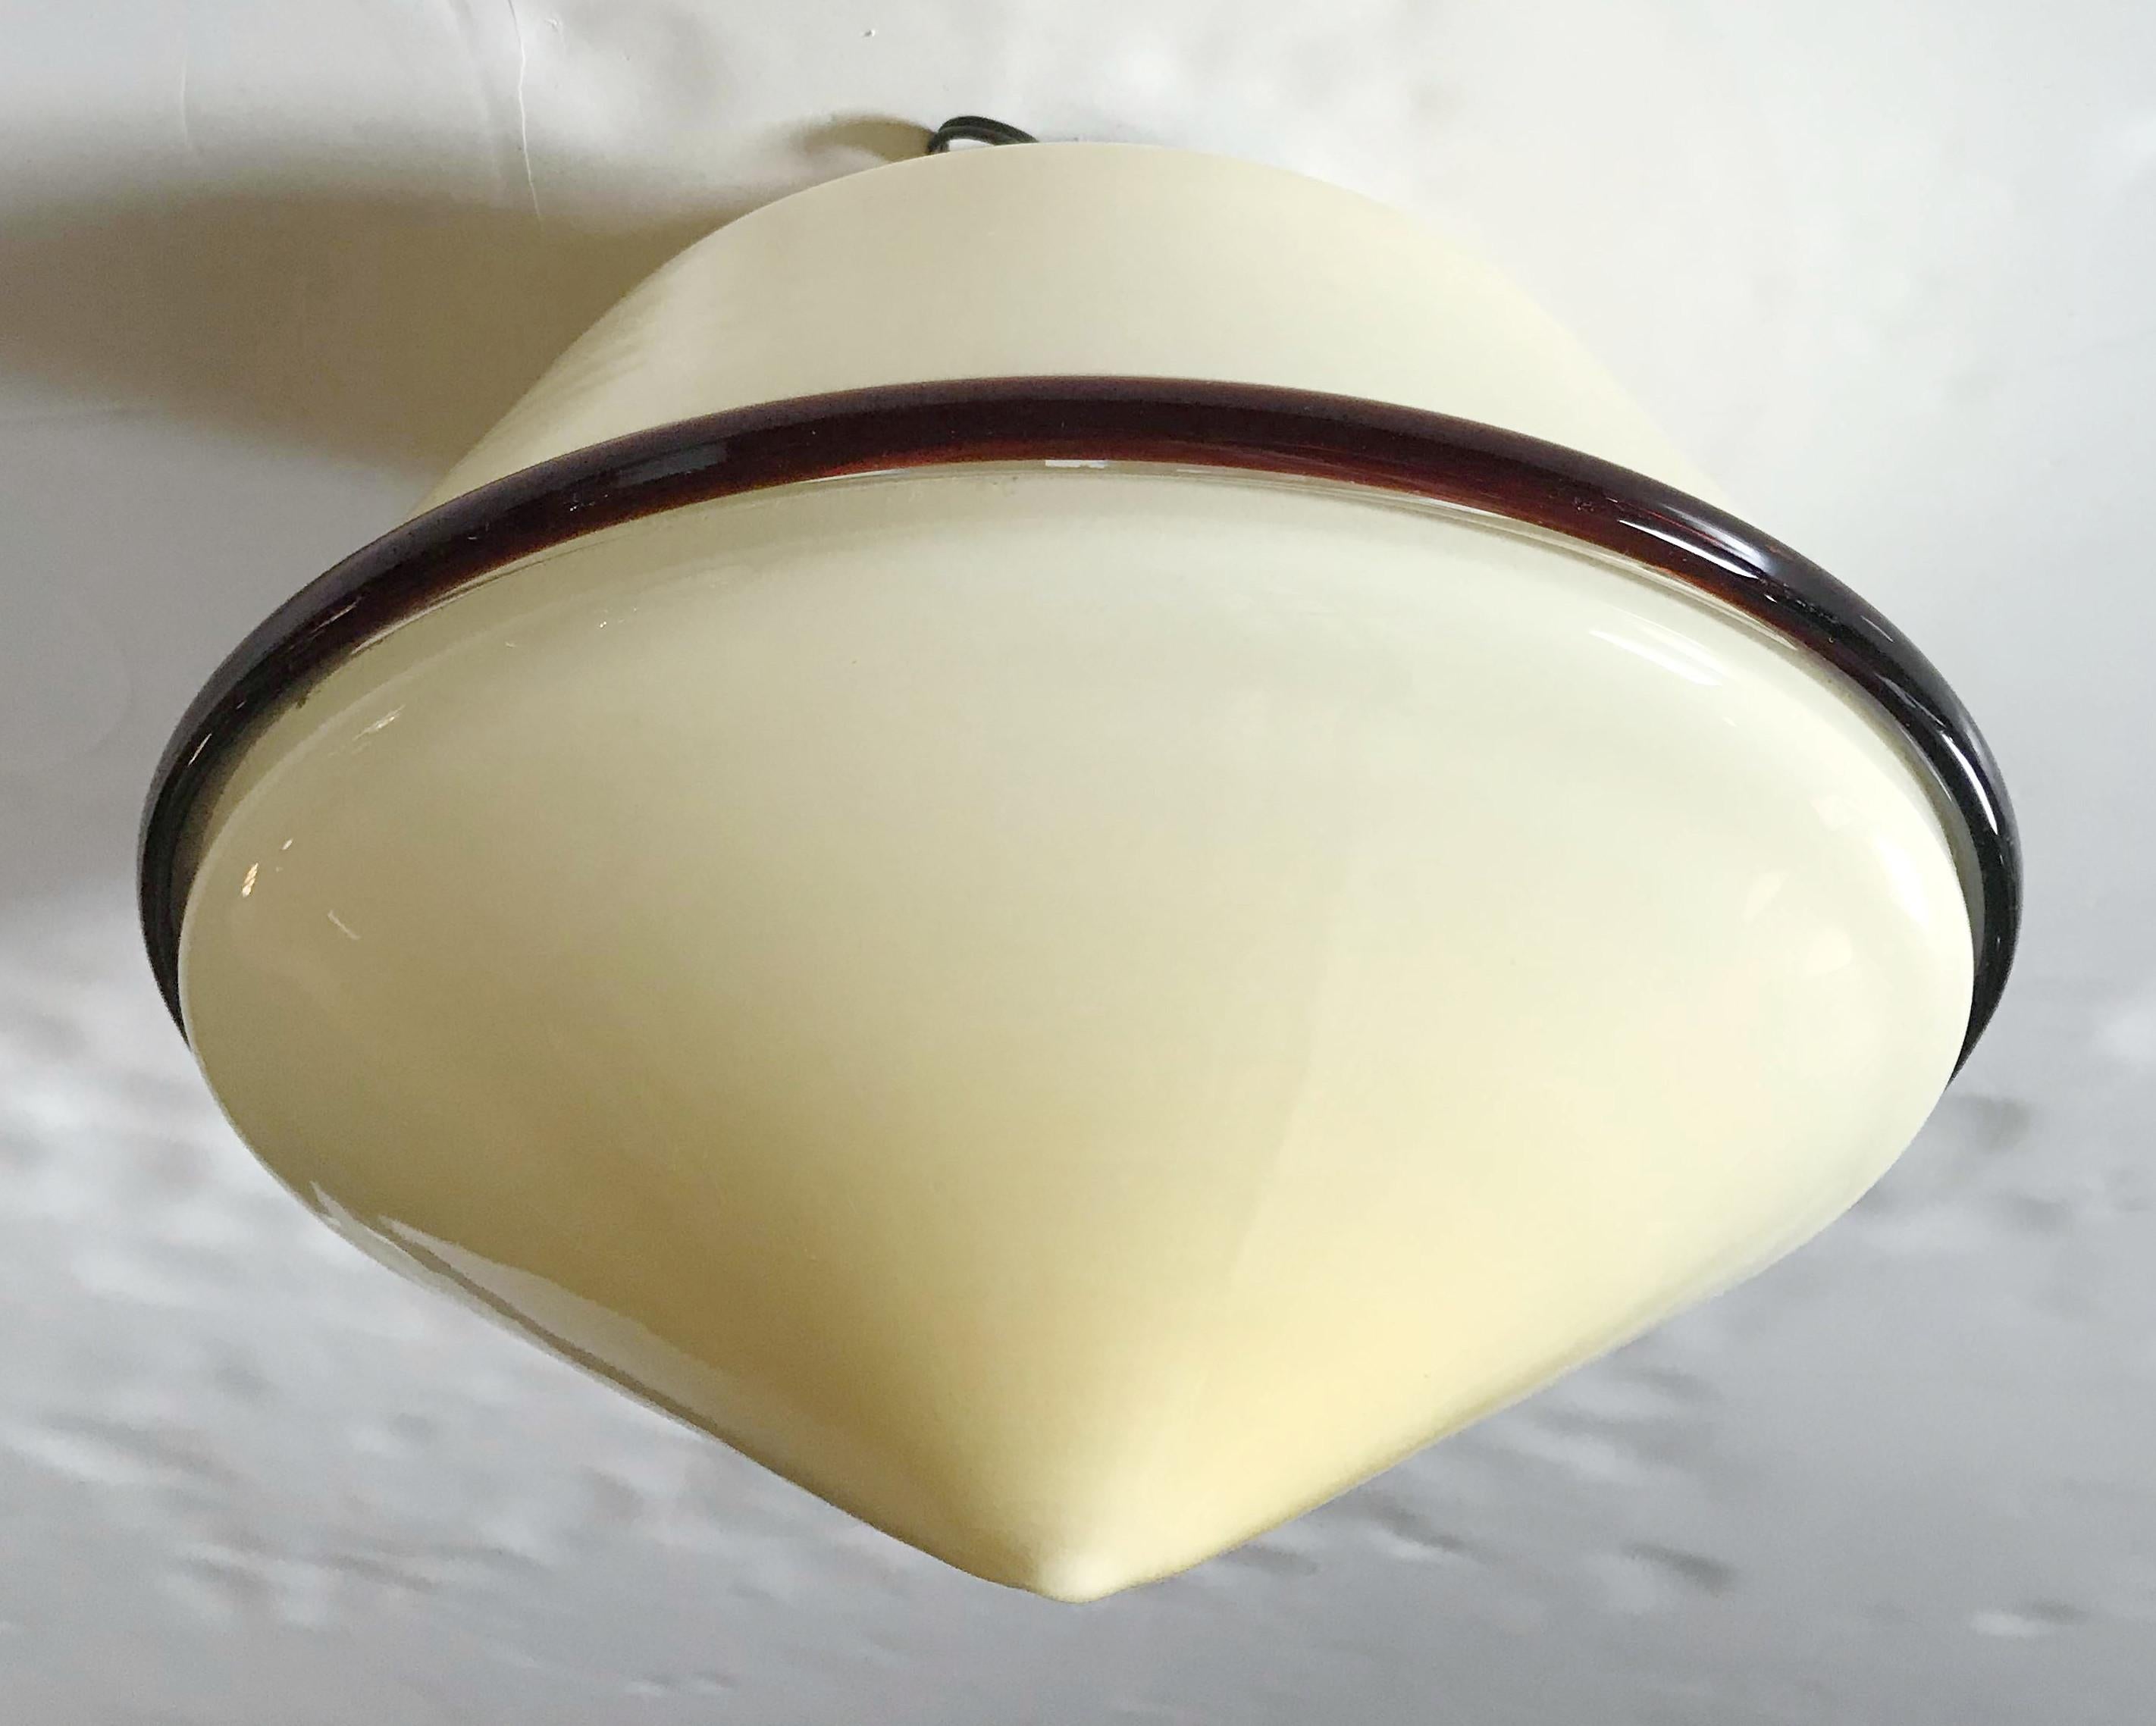 Vintage Italian cream colored Murano glass flush mount with a dark amber glass edge / Designed by De Majo Murano circa 1960's / Made in Italy / Original label on the glass
1 light / E26 or E27 type / max 60W
Diameter: 11 inches / Height: 8.5